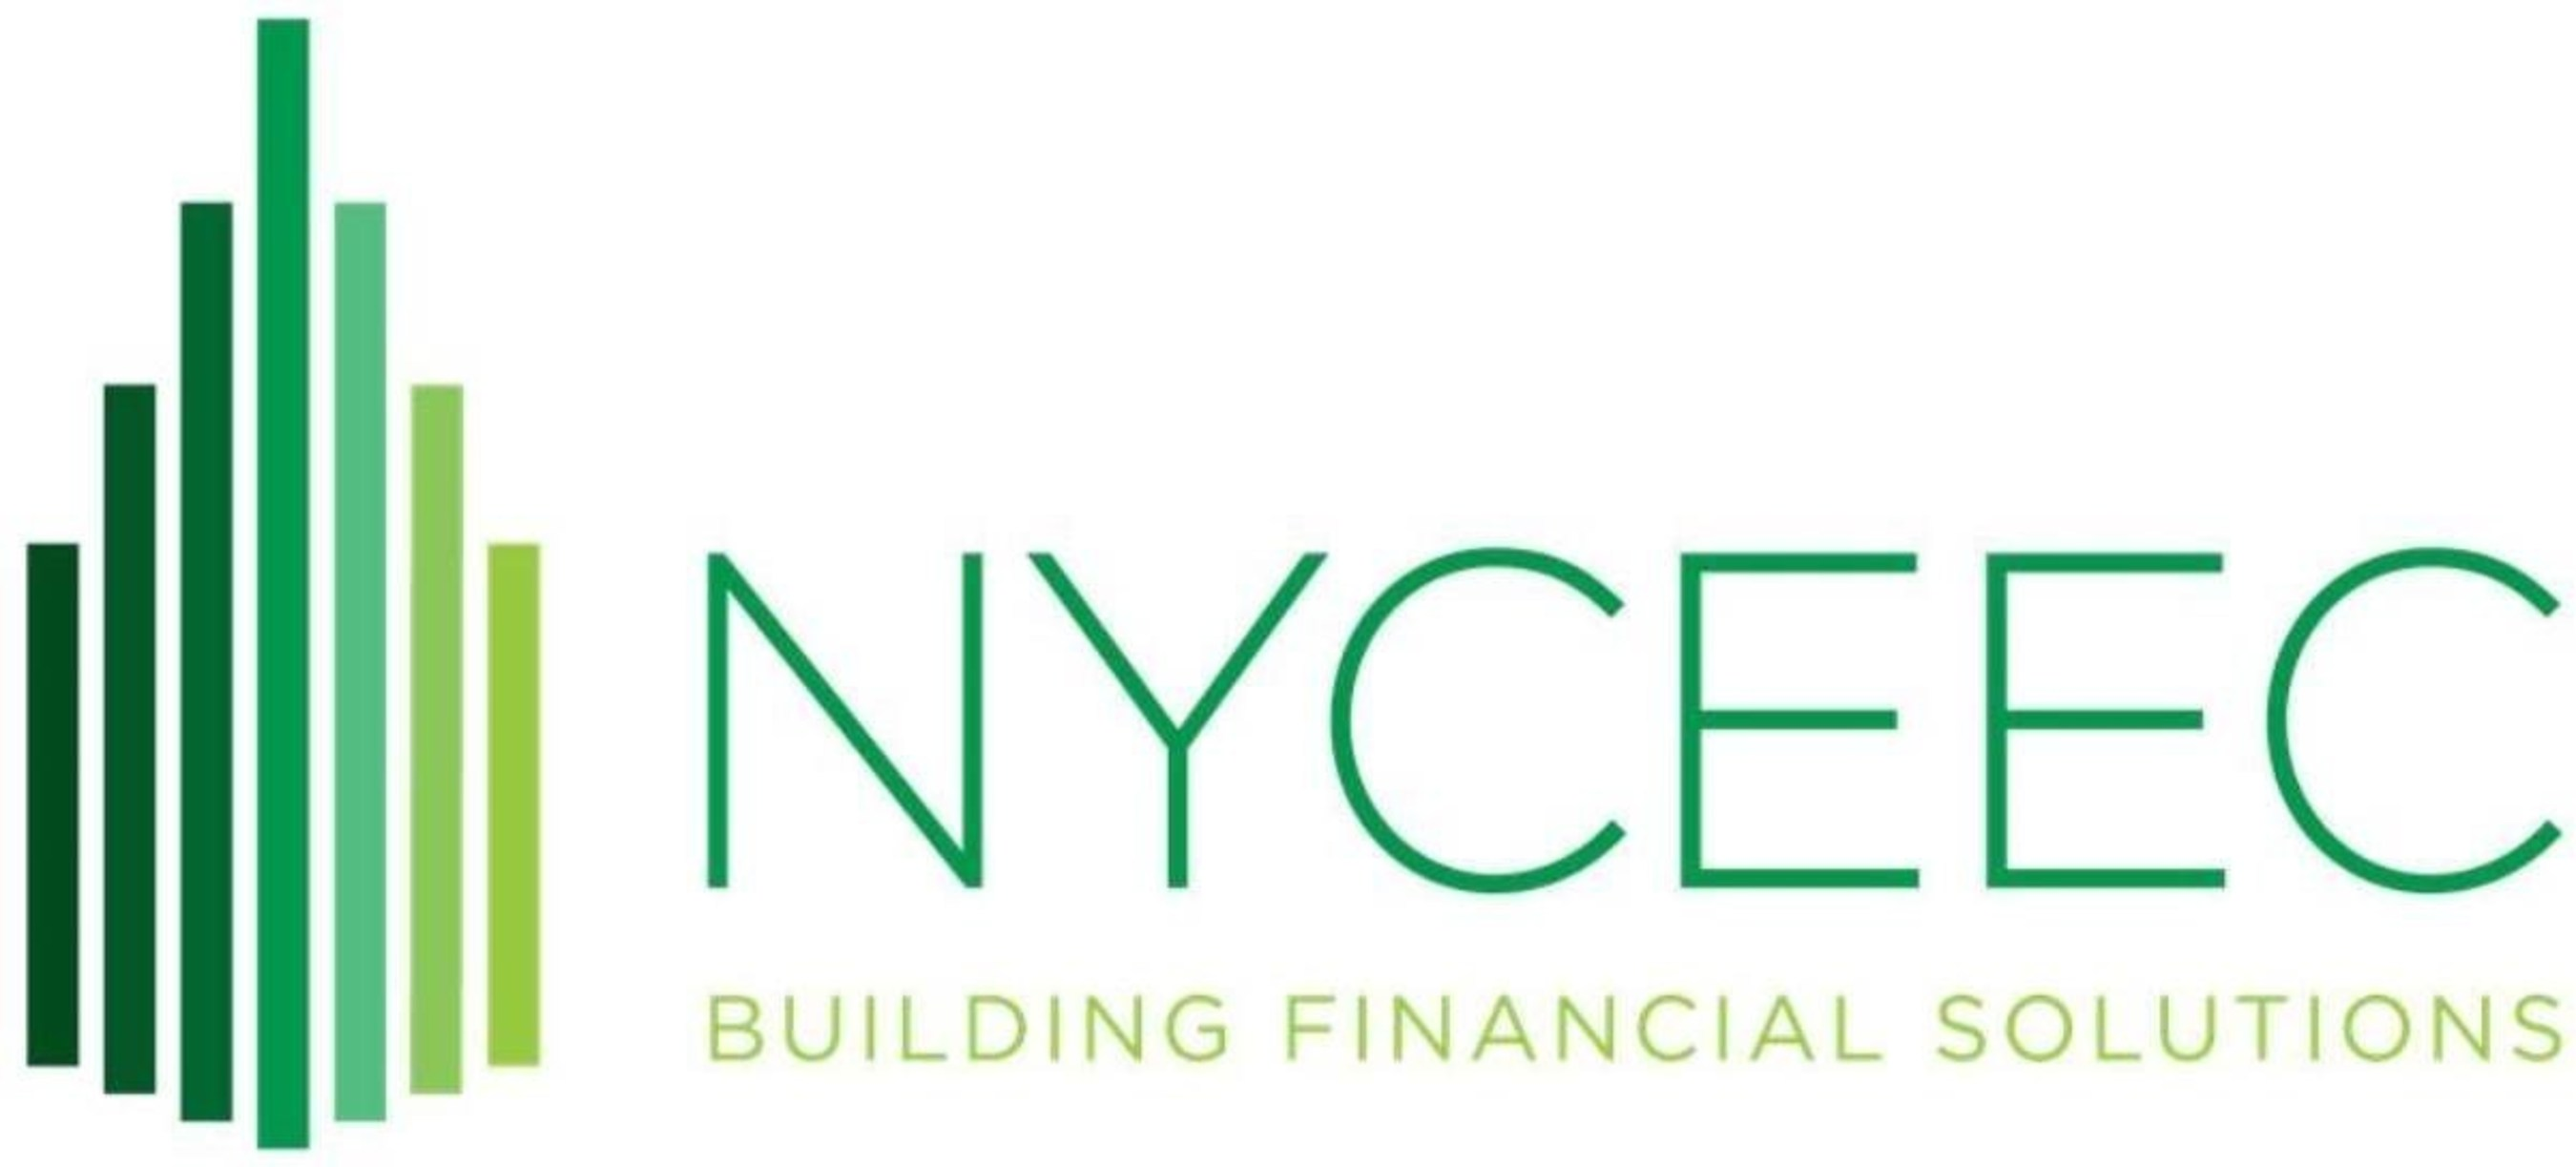 nyceec-logo